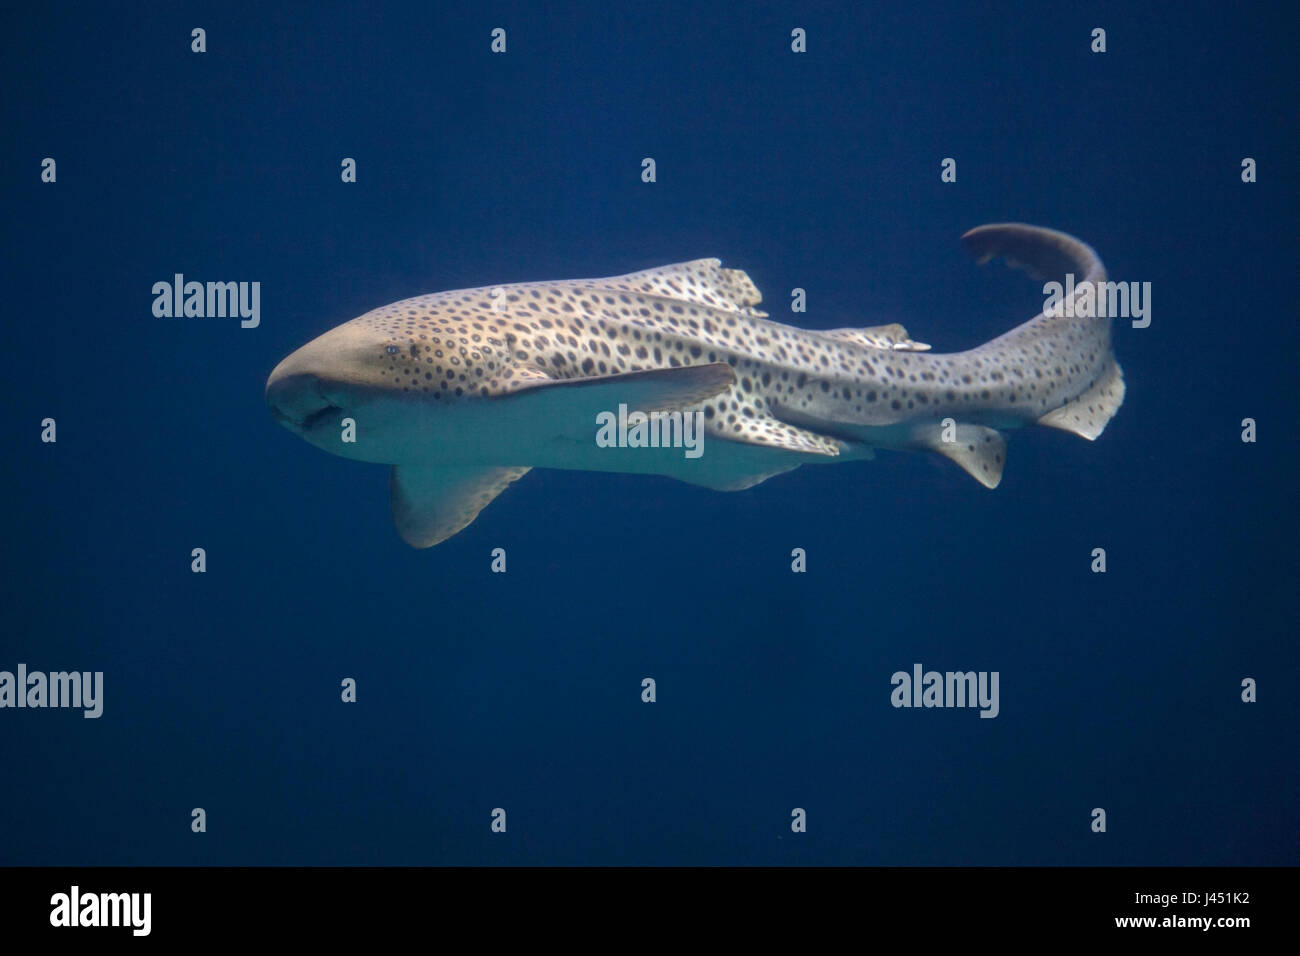 Zebra Shark im Blauwasser Stockfoto